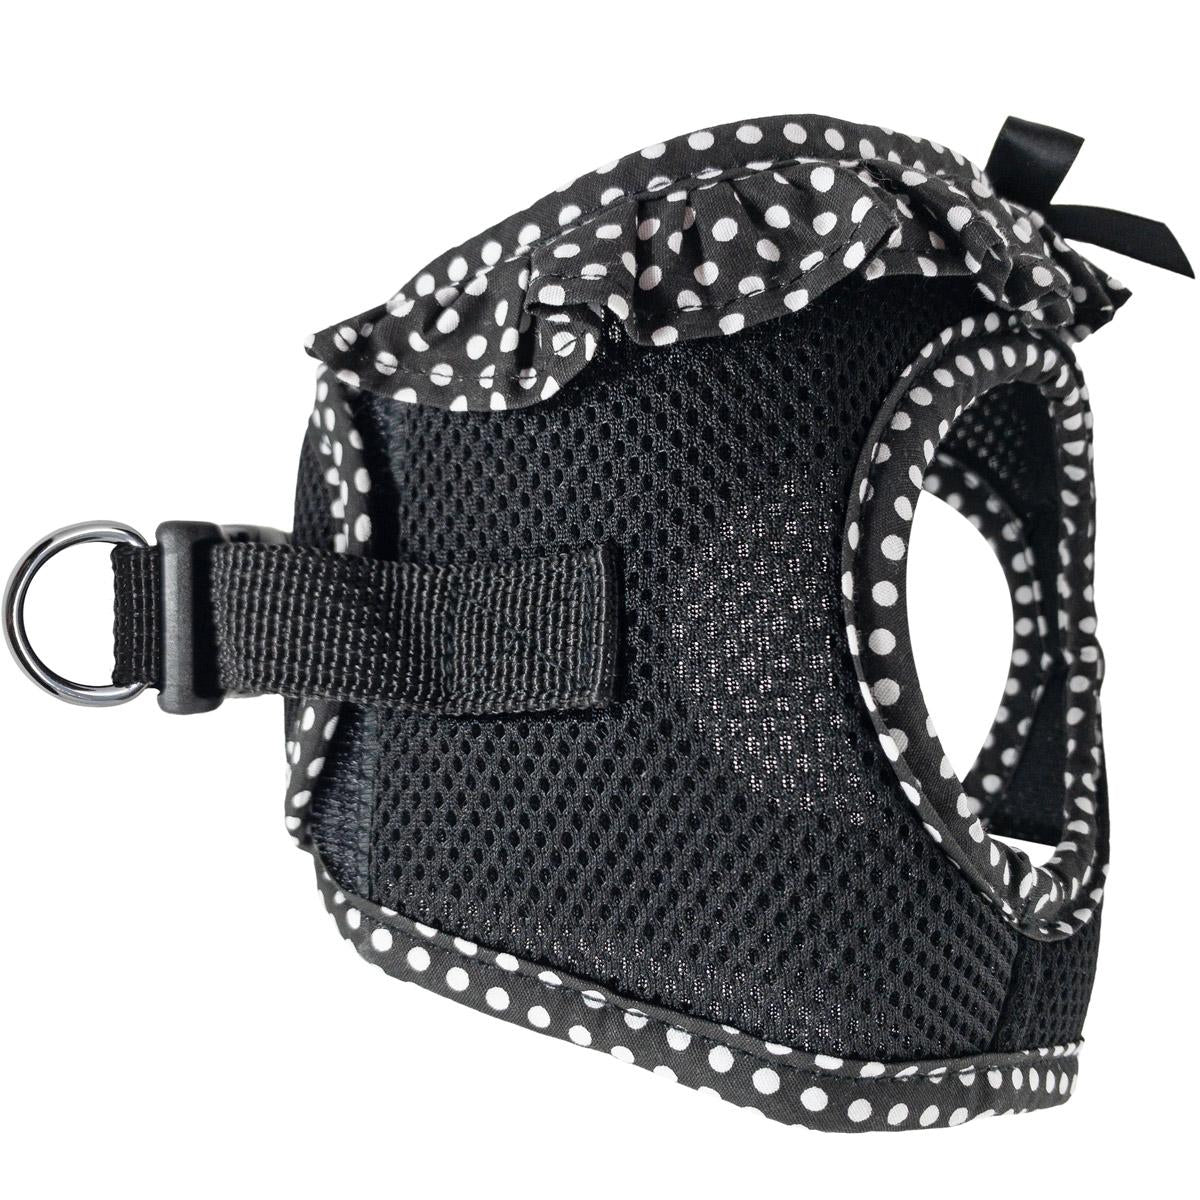 American River Choke Free Dog Harness Polka Dot Collection - Black and White Polka Dot